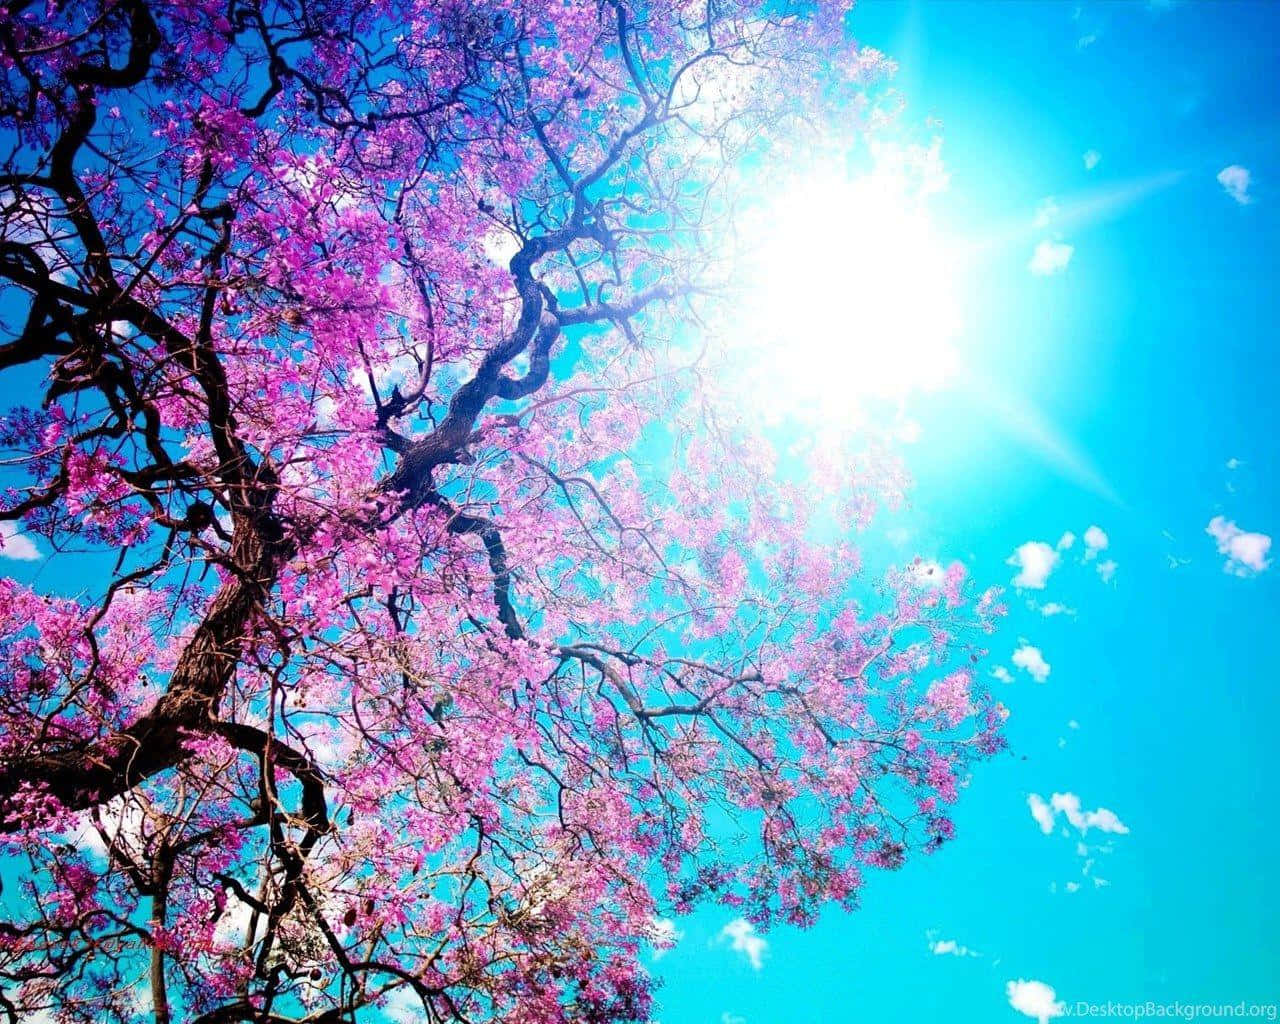 Ettræ Med Lyserøde Blomster På Himlen.